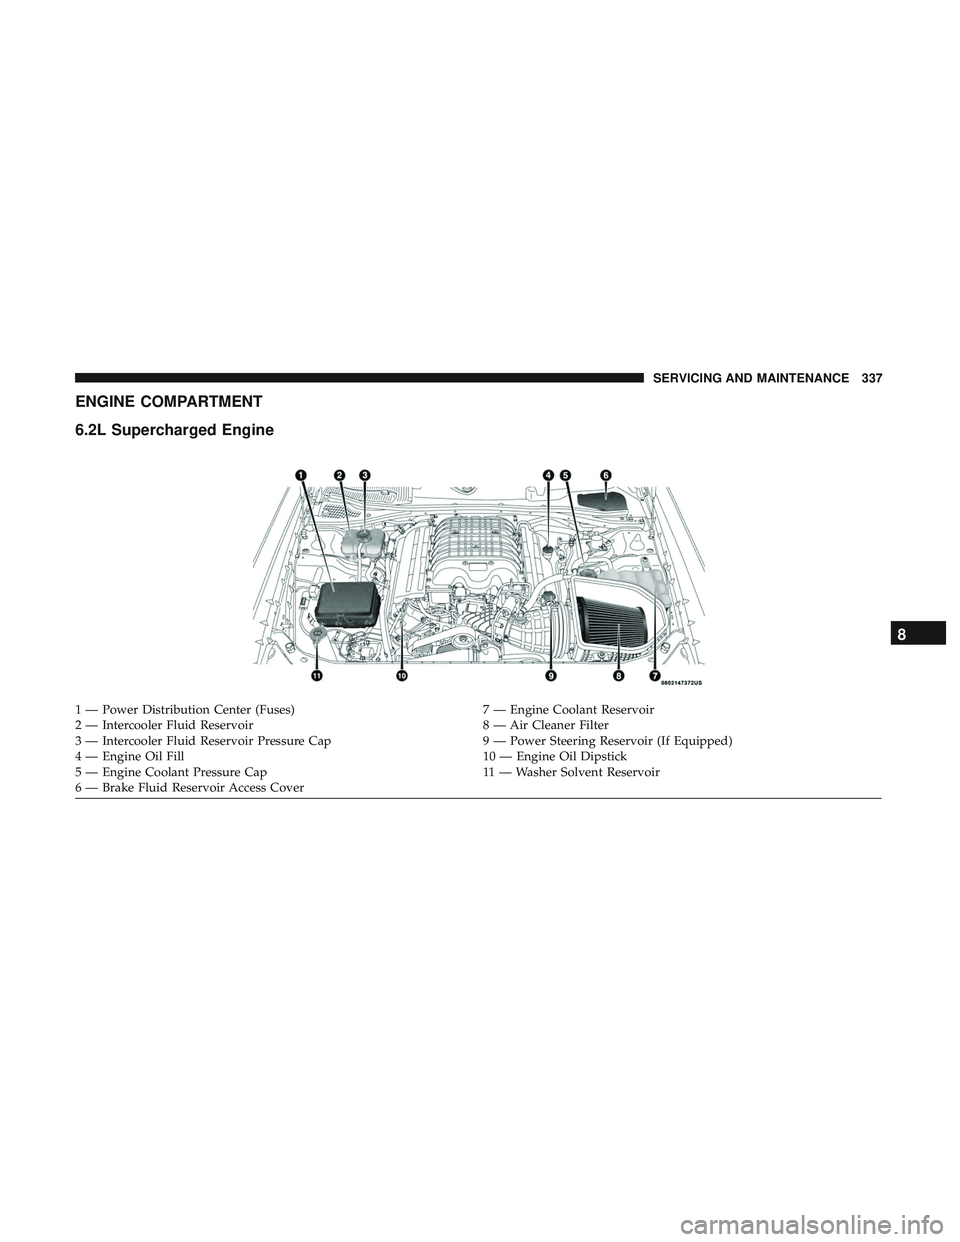 DODGE CHALLENGER SRT 2019  Owners Manual ENGINE COMPARTMENT
6.2L Supercharged Engine
1 — Power Distribution Center (Fuses)7 — Engine Coolant Reservoir
2 — Intercooler Fluid Reservoir 8 — Air Cleaner Filter
3 — Intercooler Fluid Res